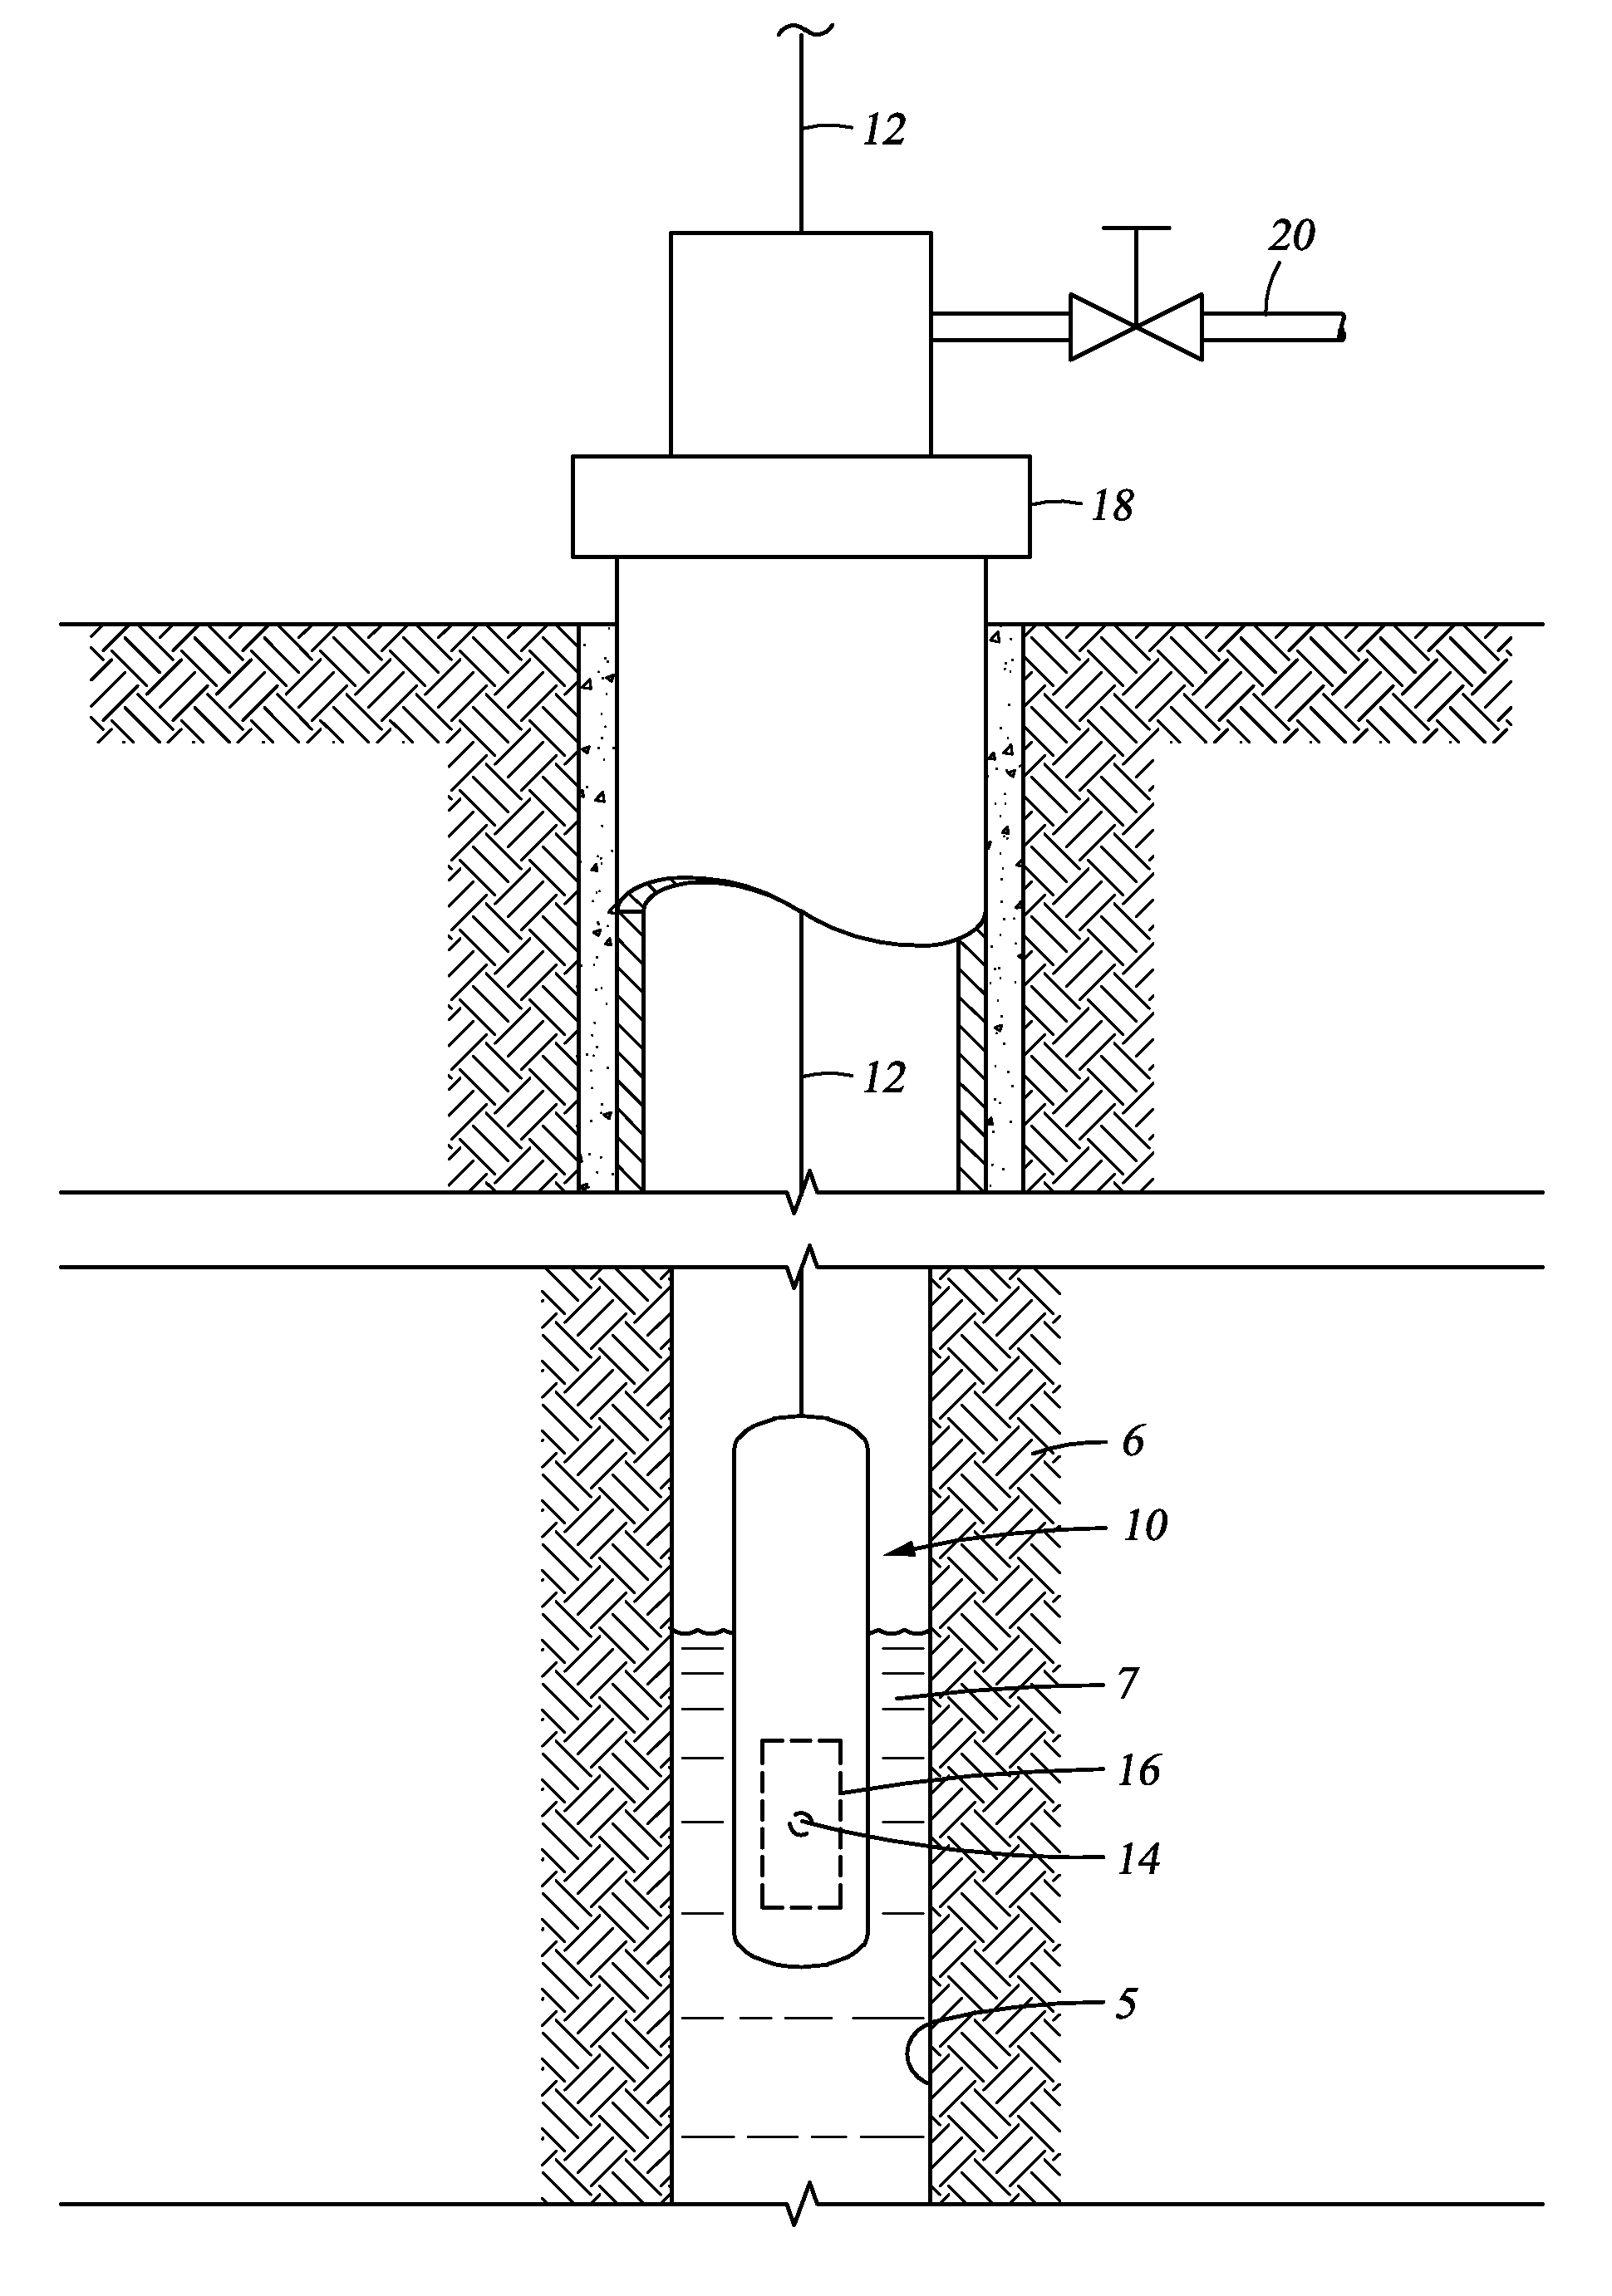 Method of measuring multi-phase fluid flow downhole